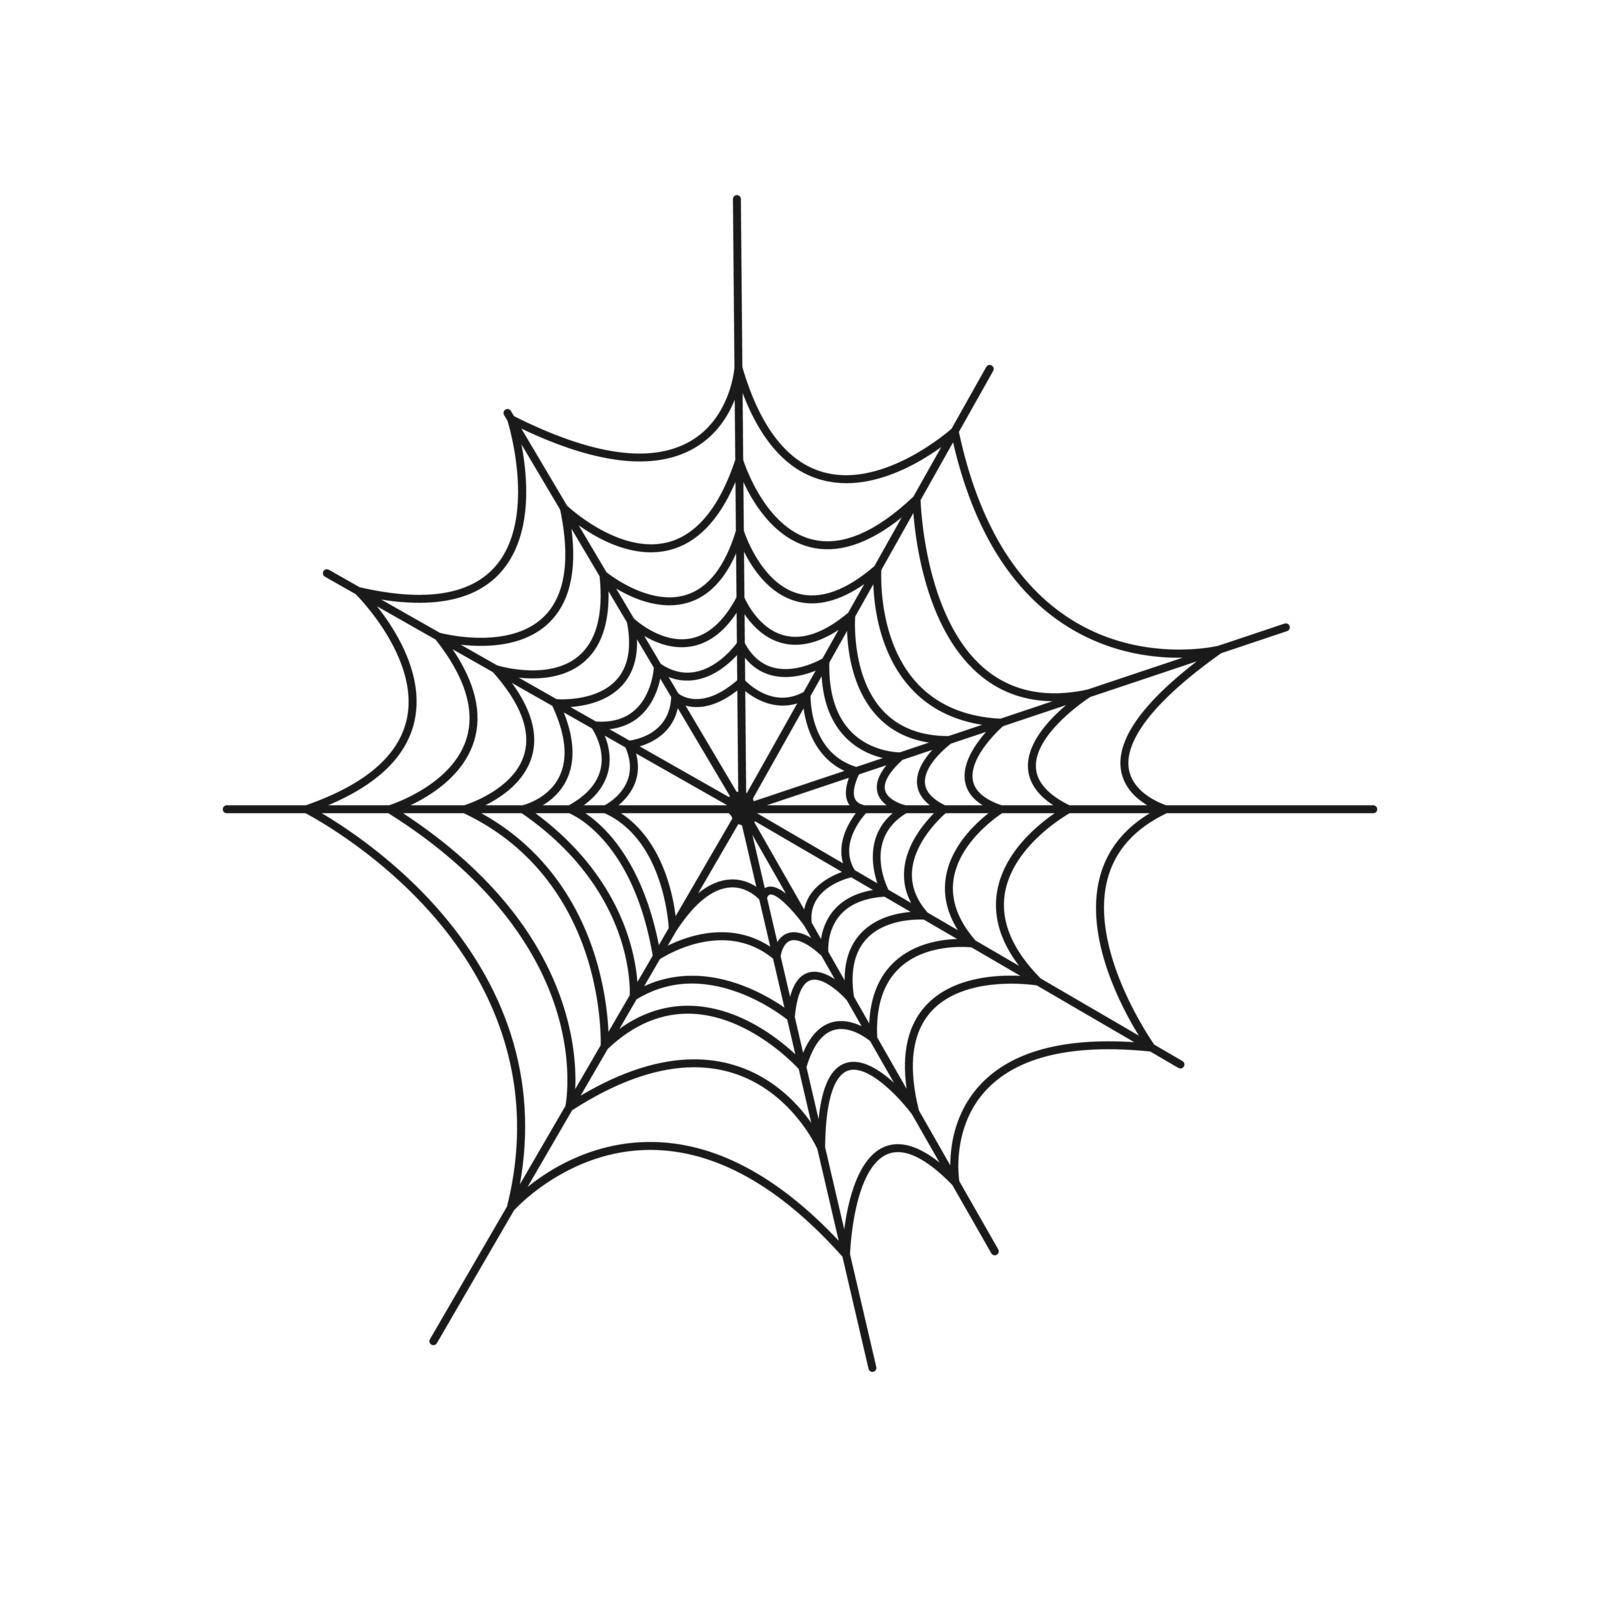 Spider web vector illustration. Black spider web isolated on white background.